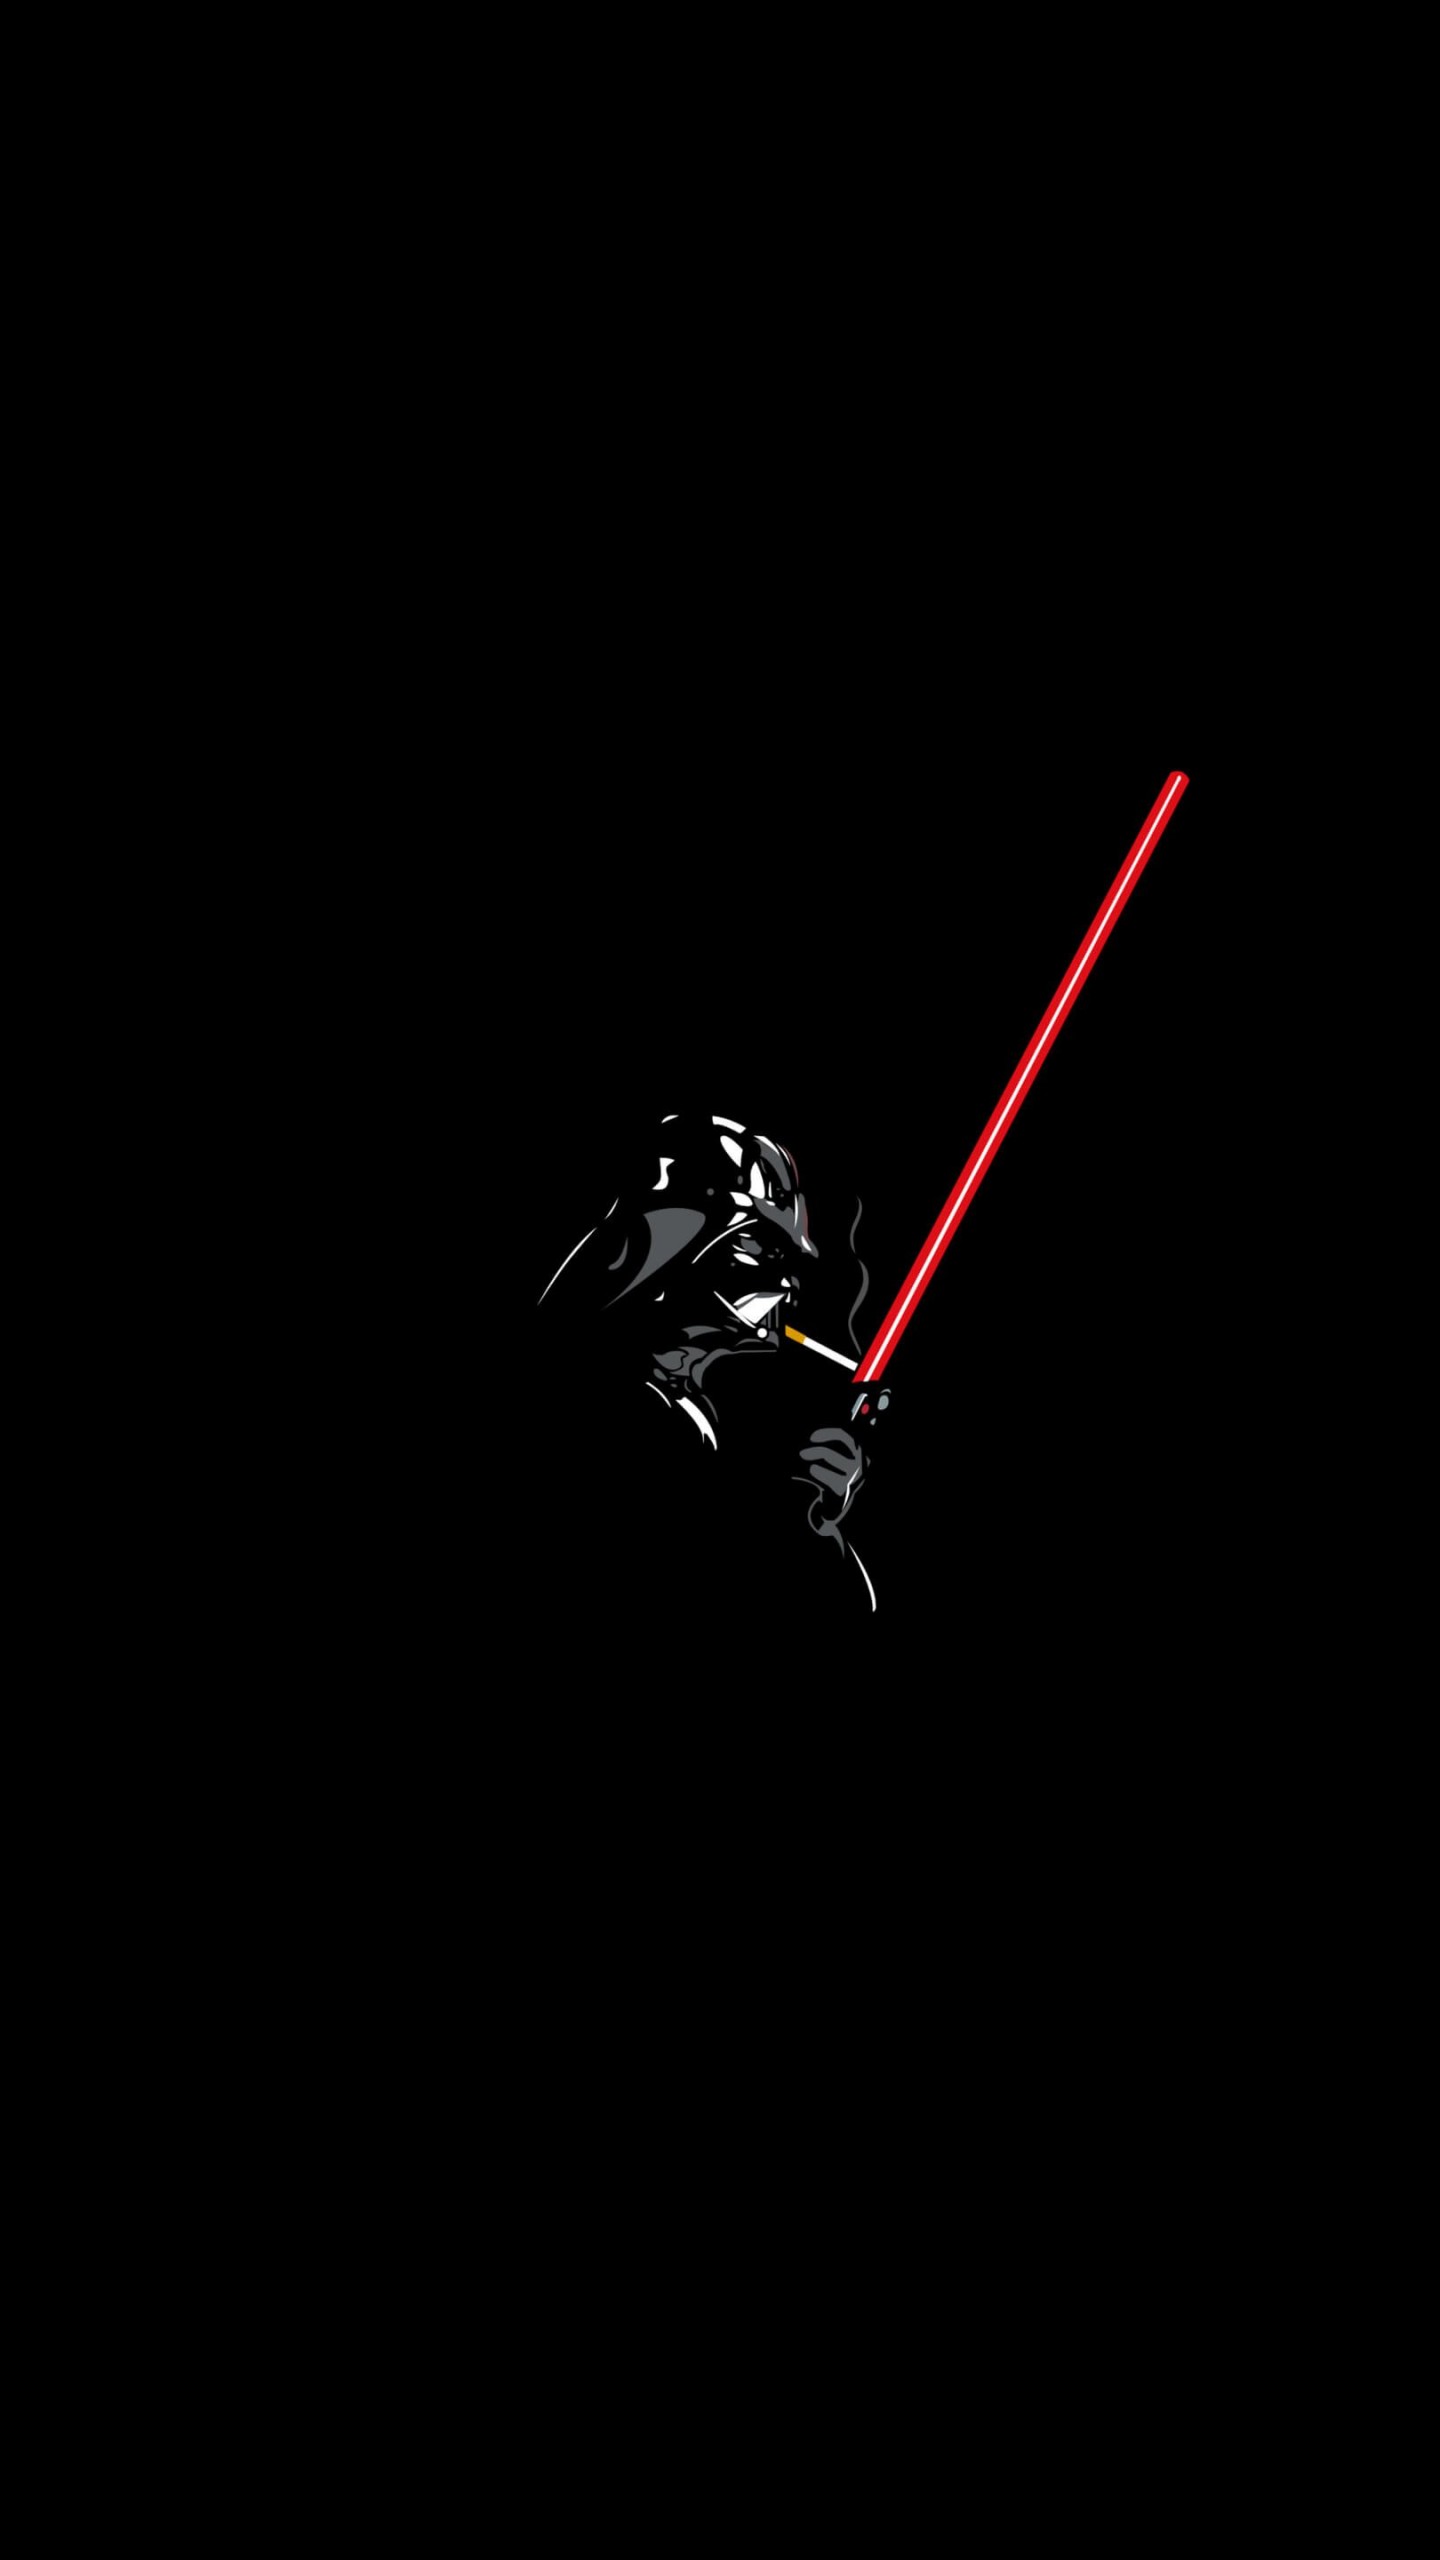 Darth Vader Lighting a Cigarette Wallpaper for LG G3